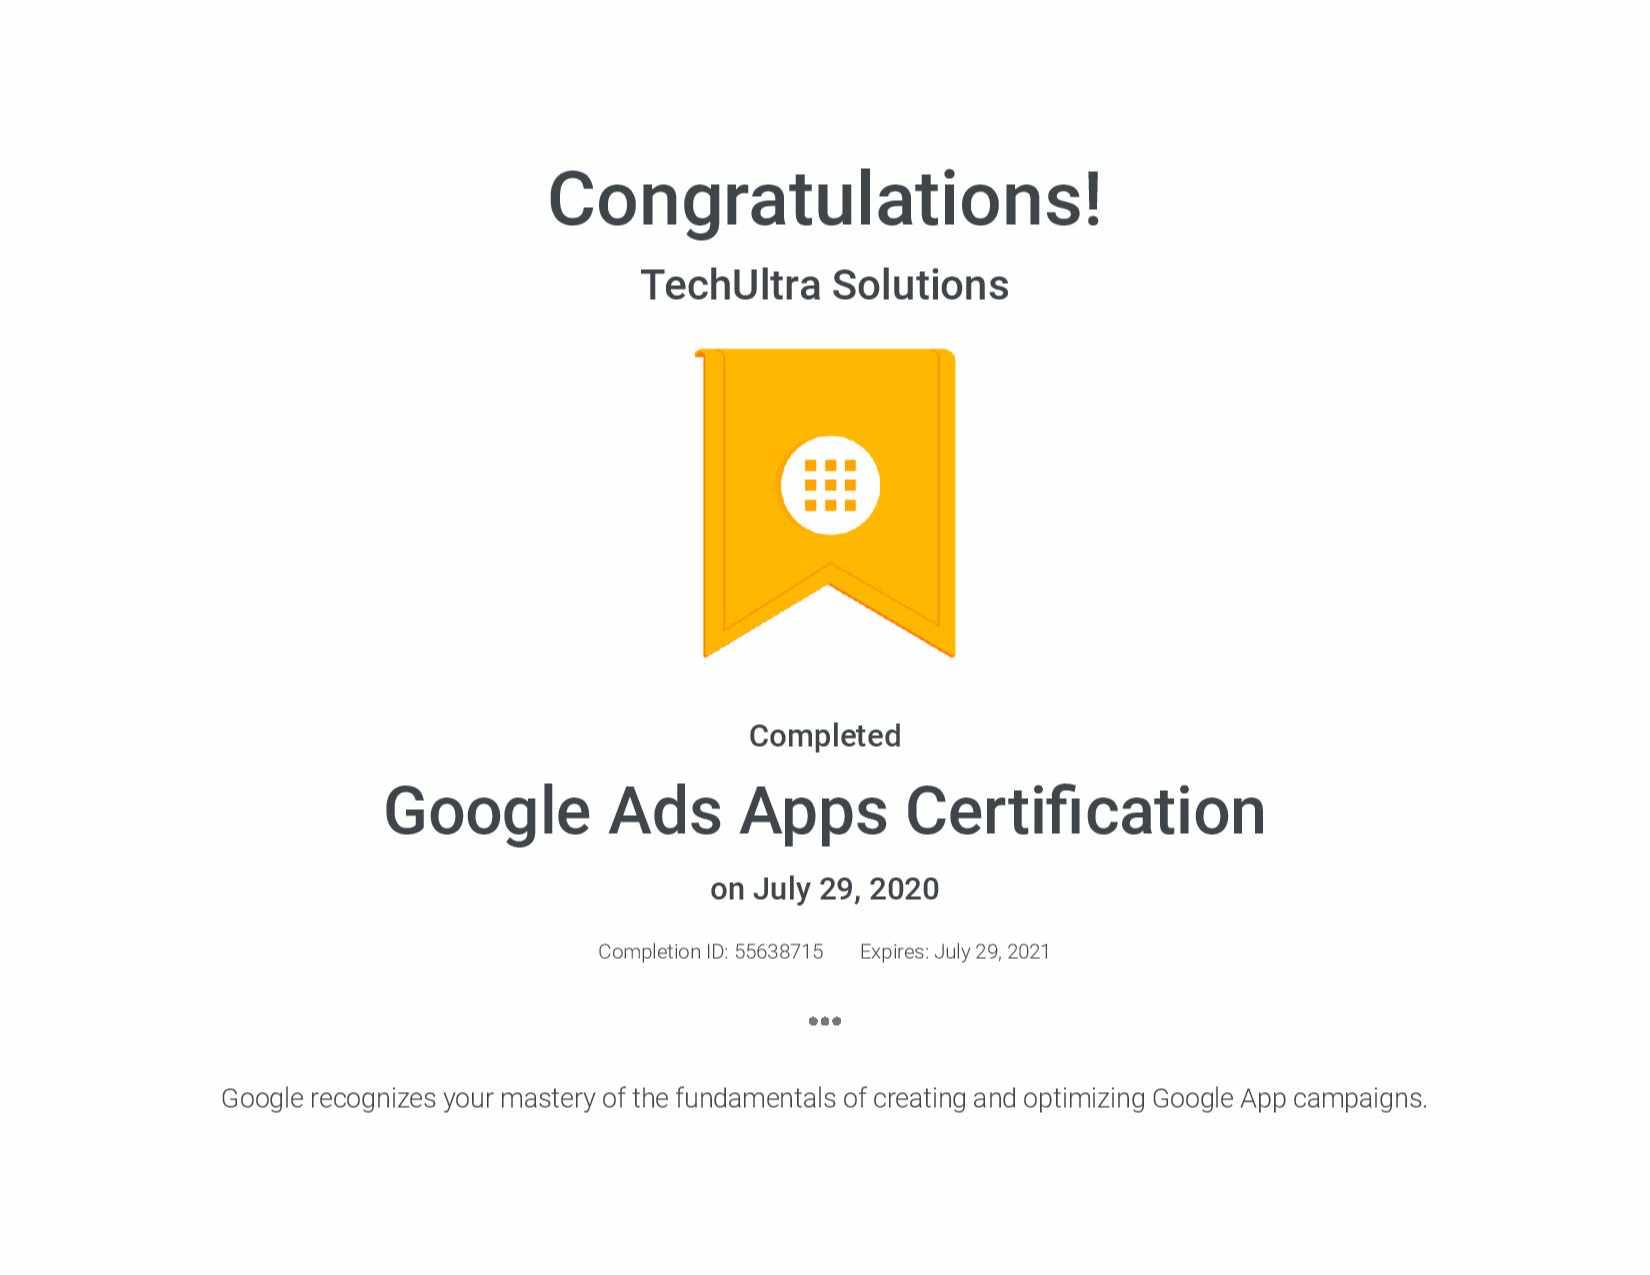 Google ads Apps Certification